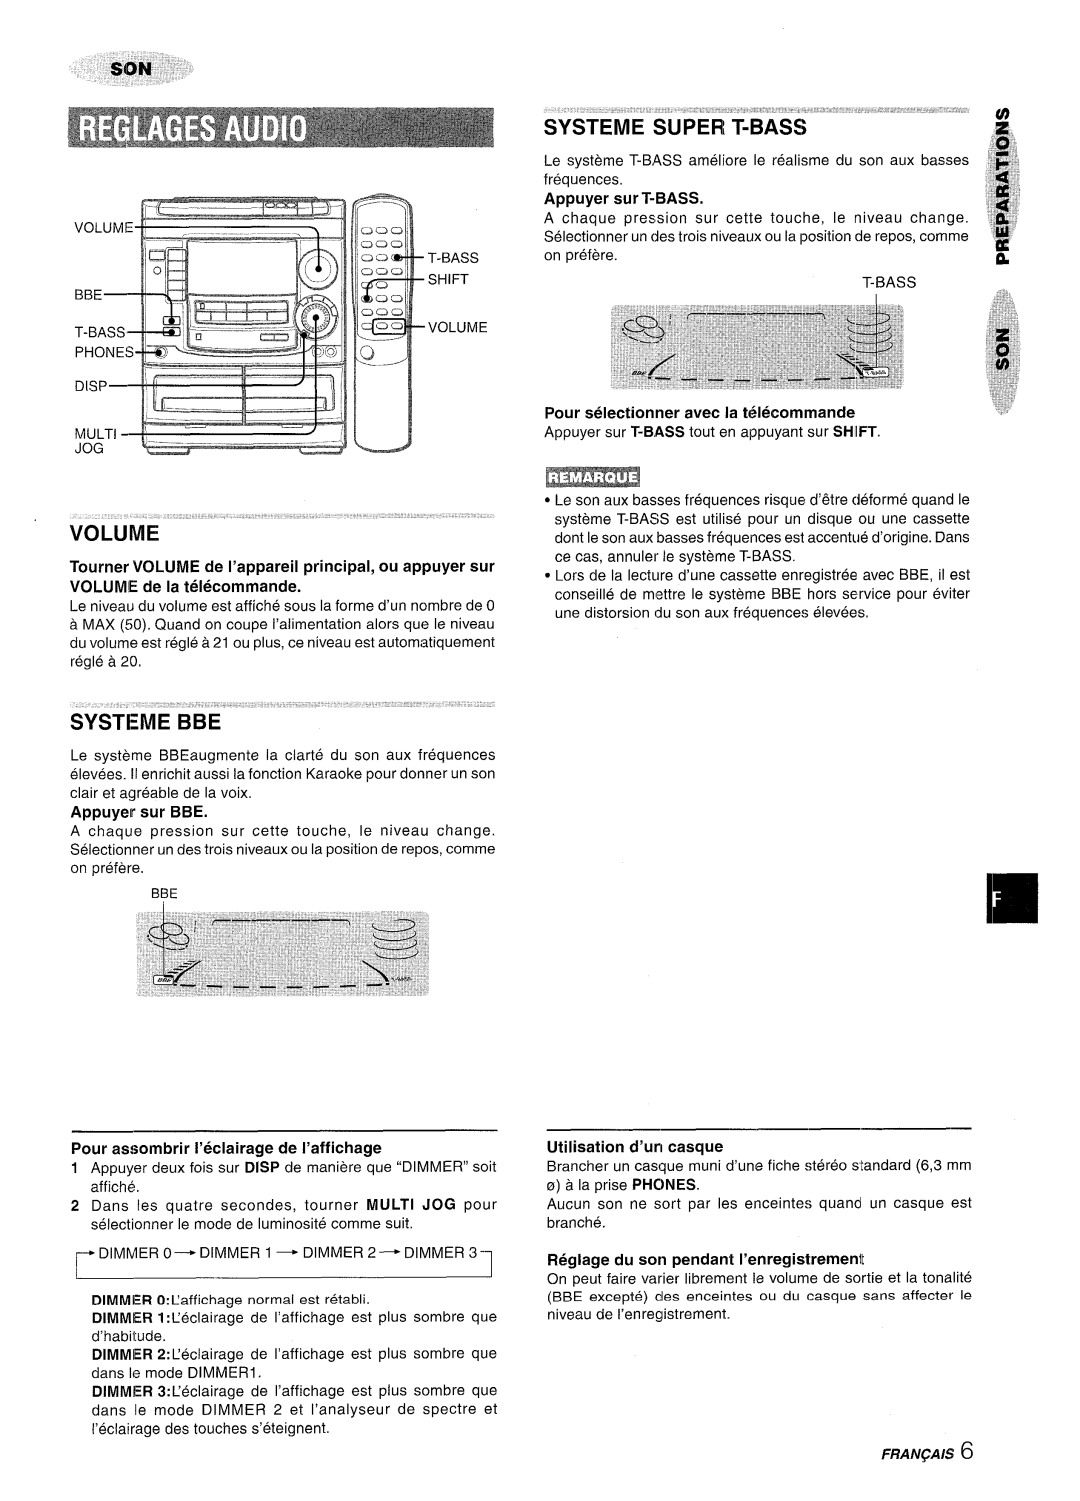 Aiwa NSX-A508 manual SYSTE-ME’SUPEliT-BASS 